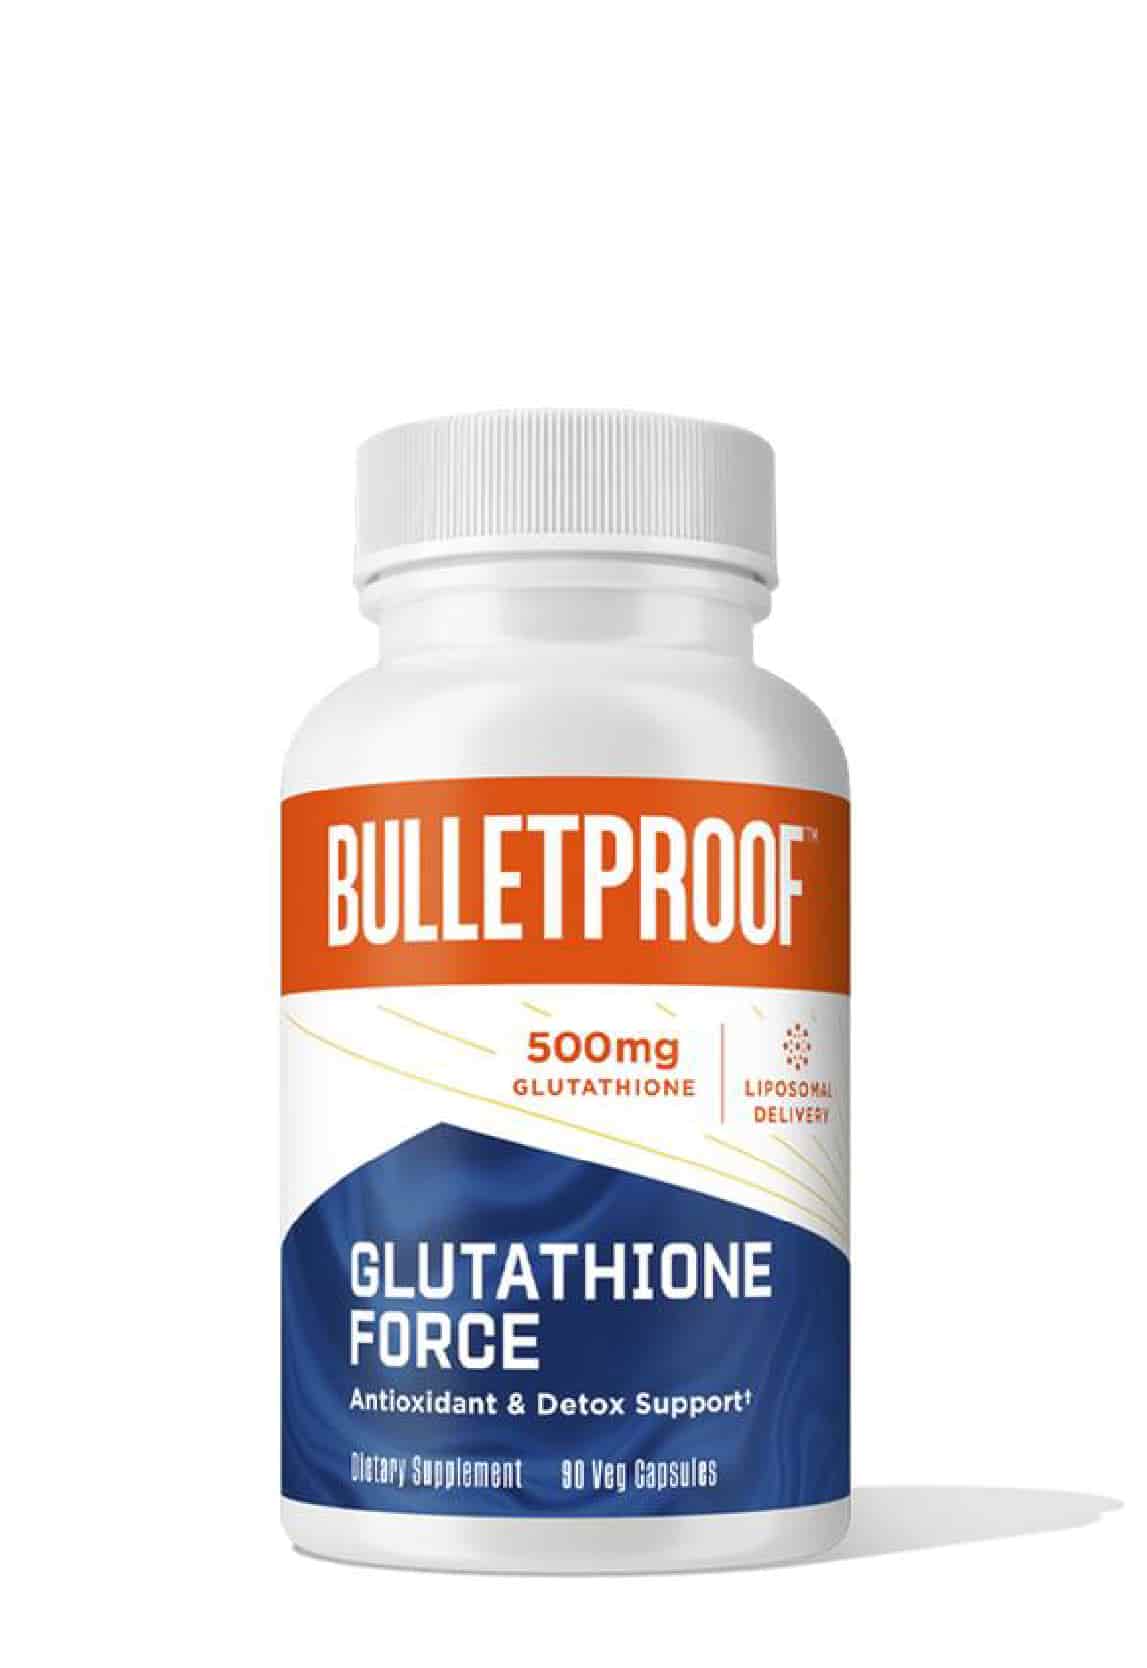 Acheter  Bulletproof Glutathione Force chez LiveHelfi